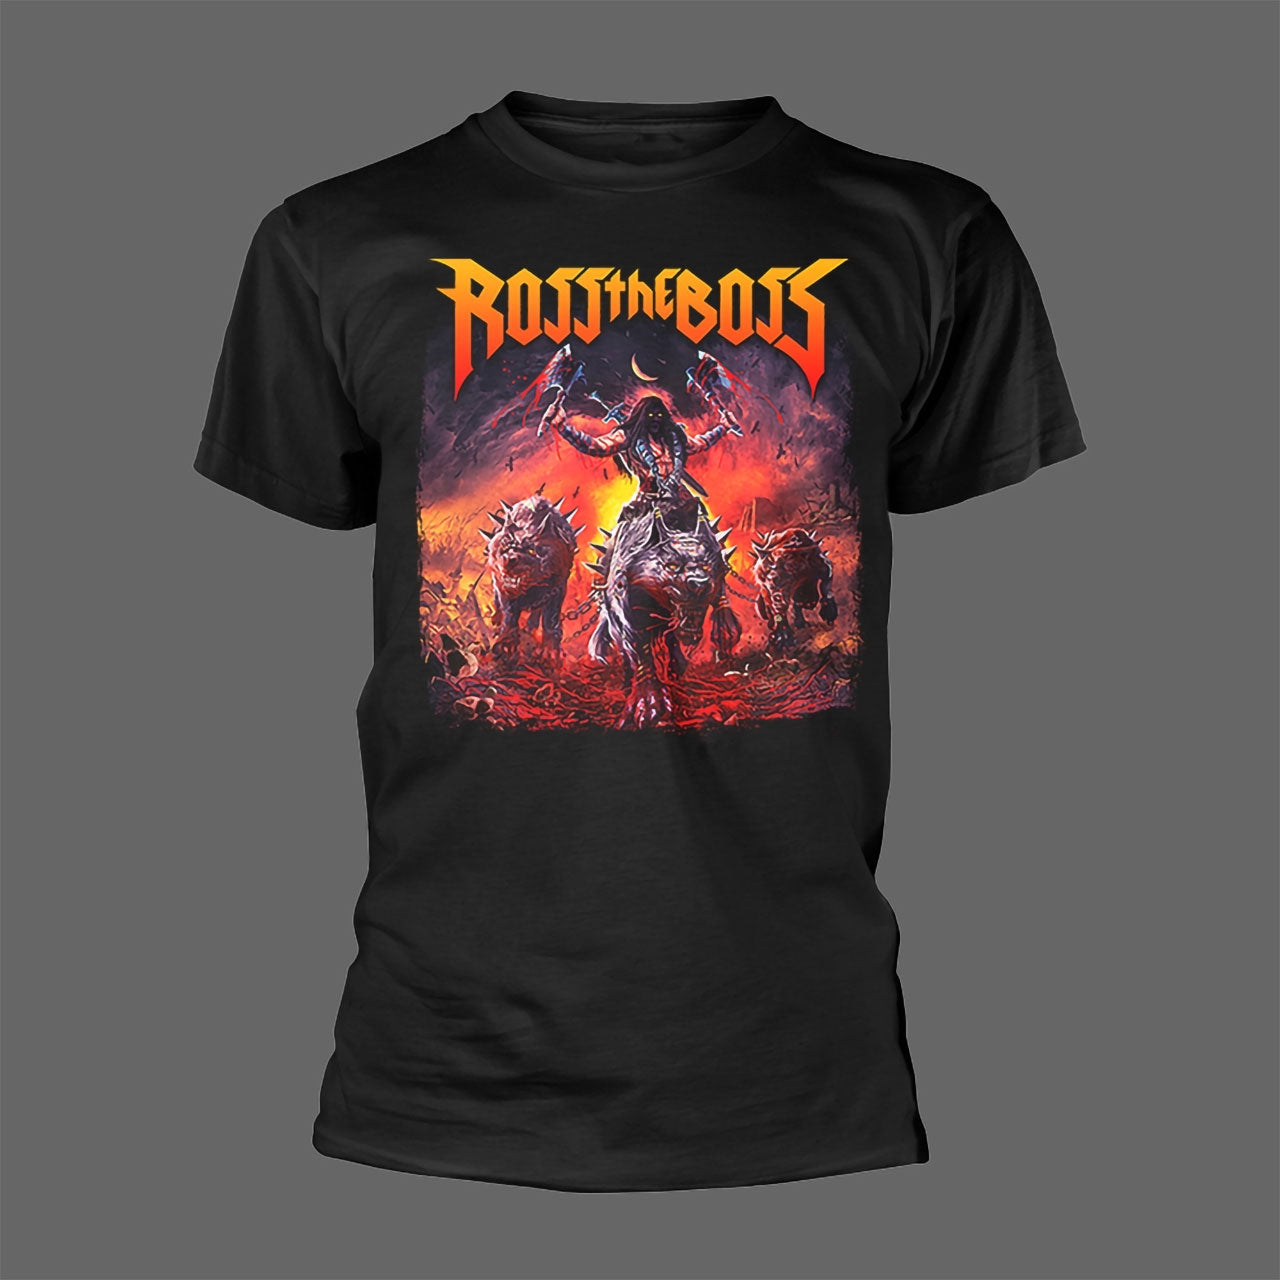 Ross the Boss - Wolves (T-Shirt)